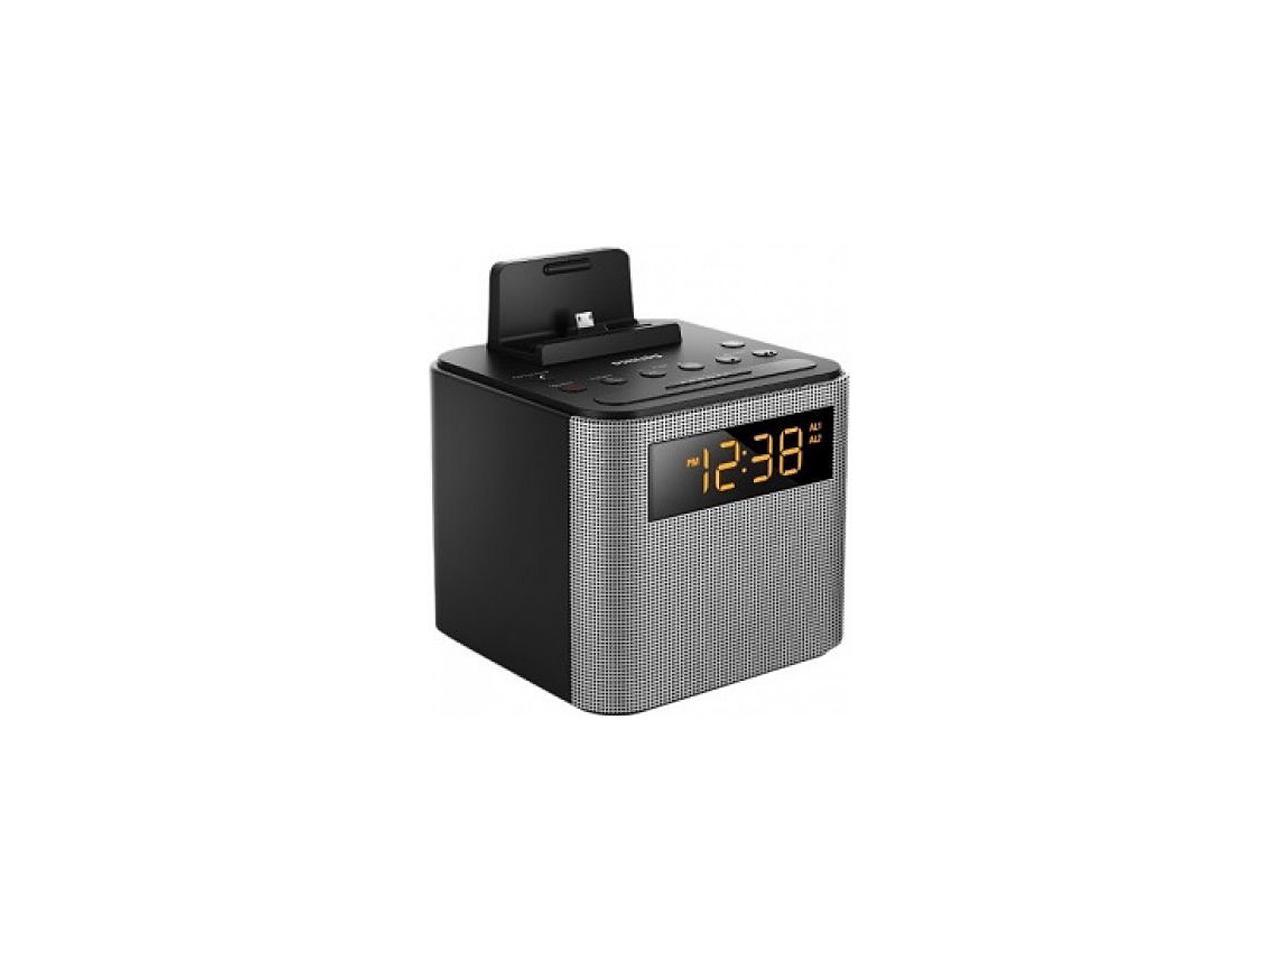 waarom deze openbaar Philips Alarm Clock Radios AJT5300/37 - Newegg.com